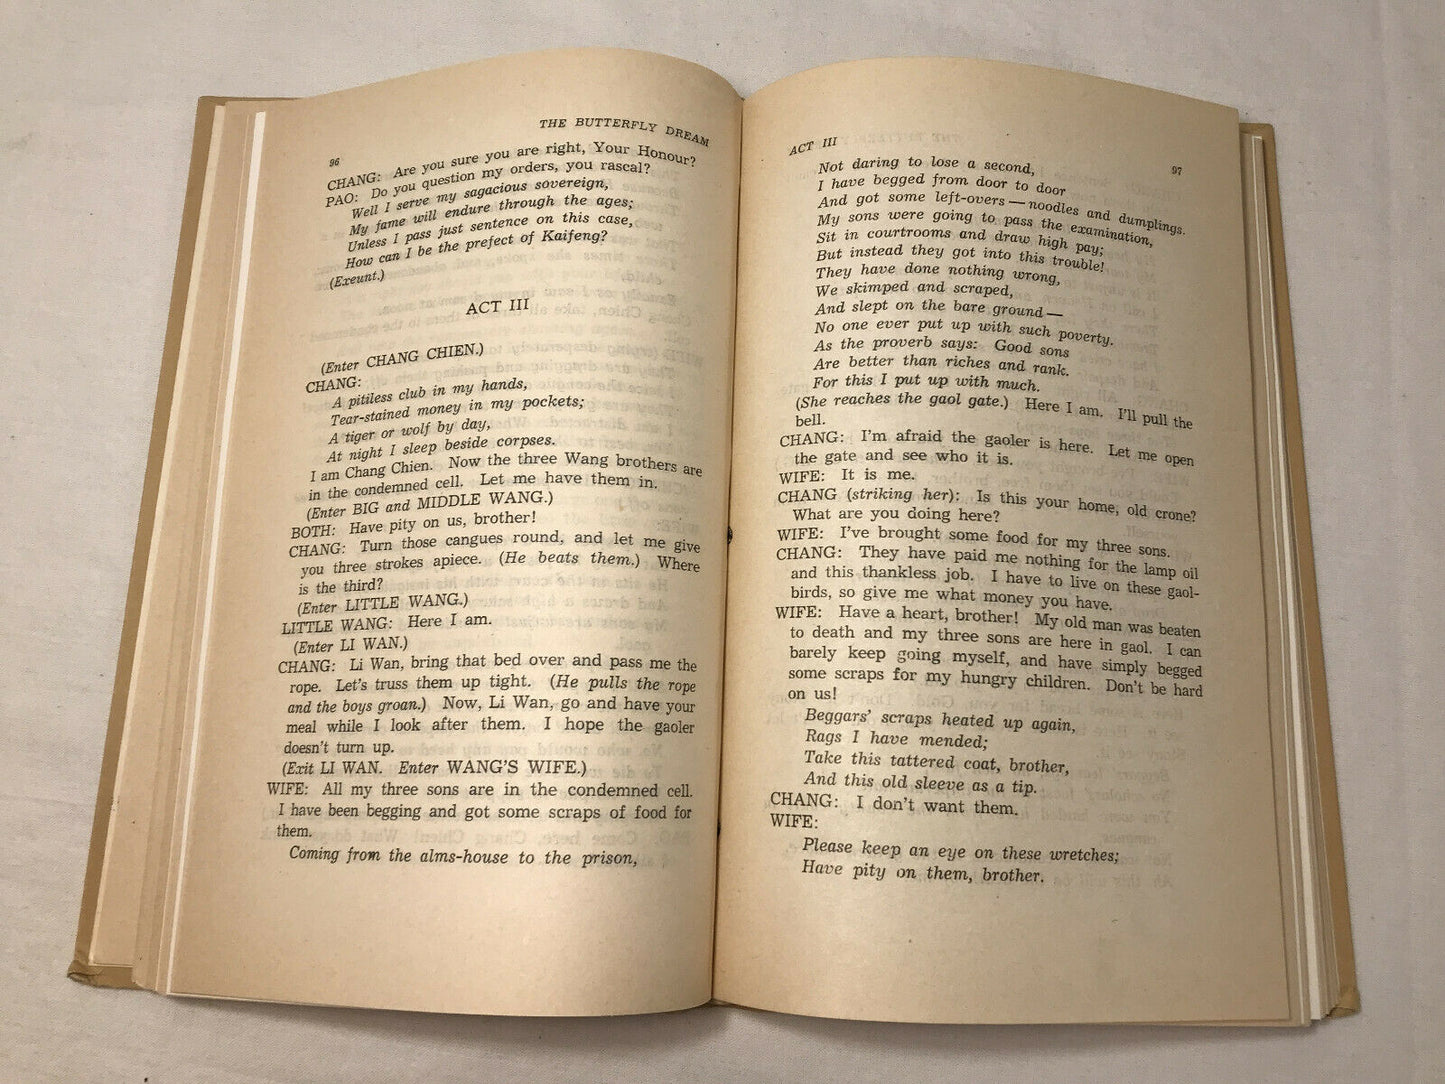 Selected plays of Kuan Han-ching 1958 Hardcover